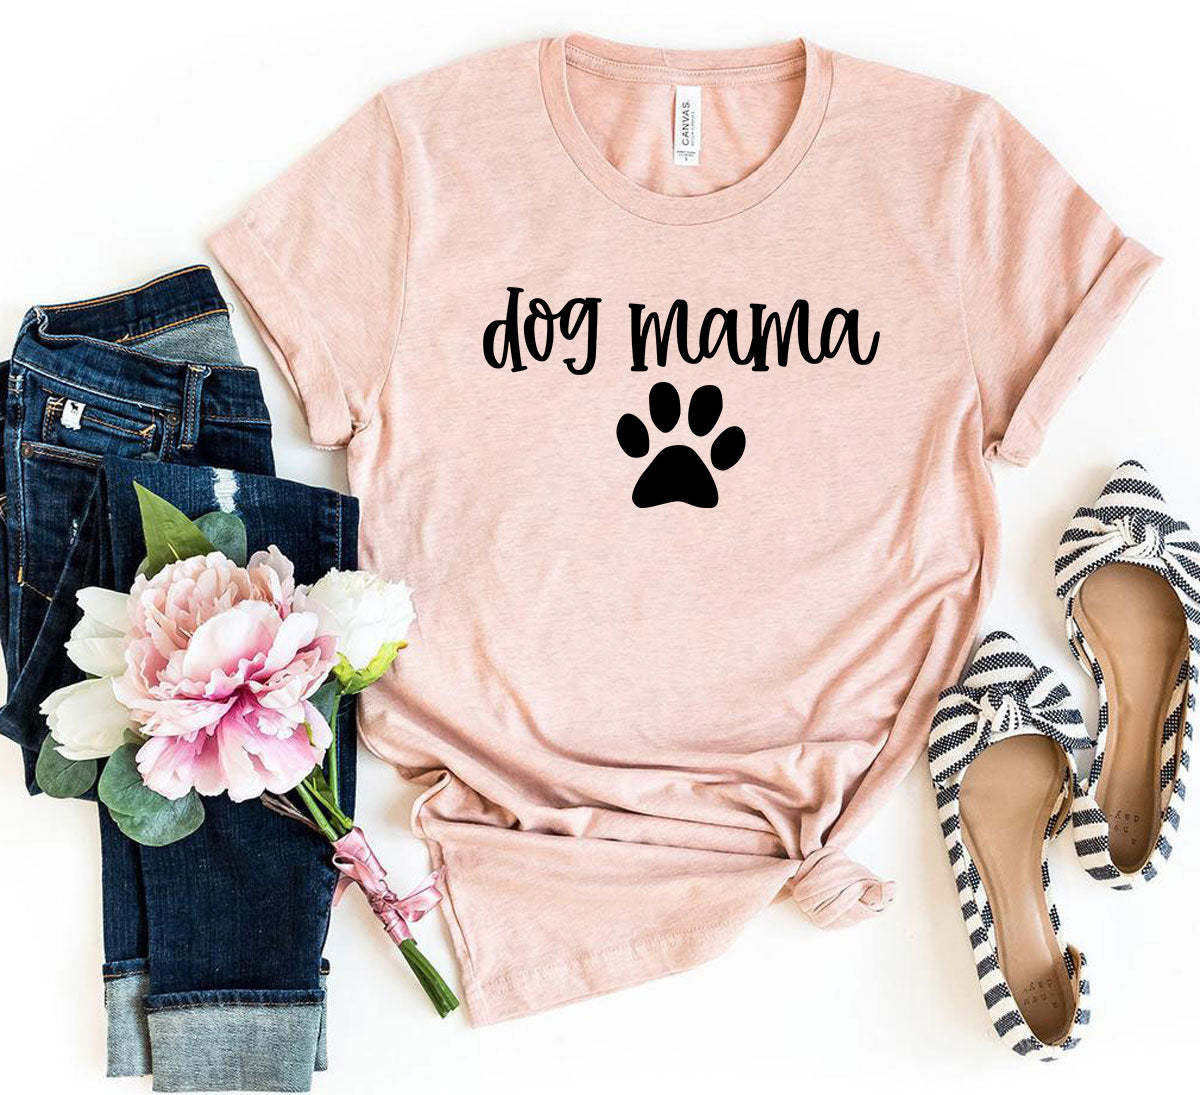 Dog Mama T-Shirt - Heather Prism Lilac - S